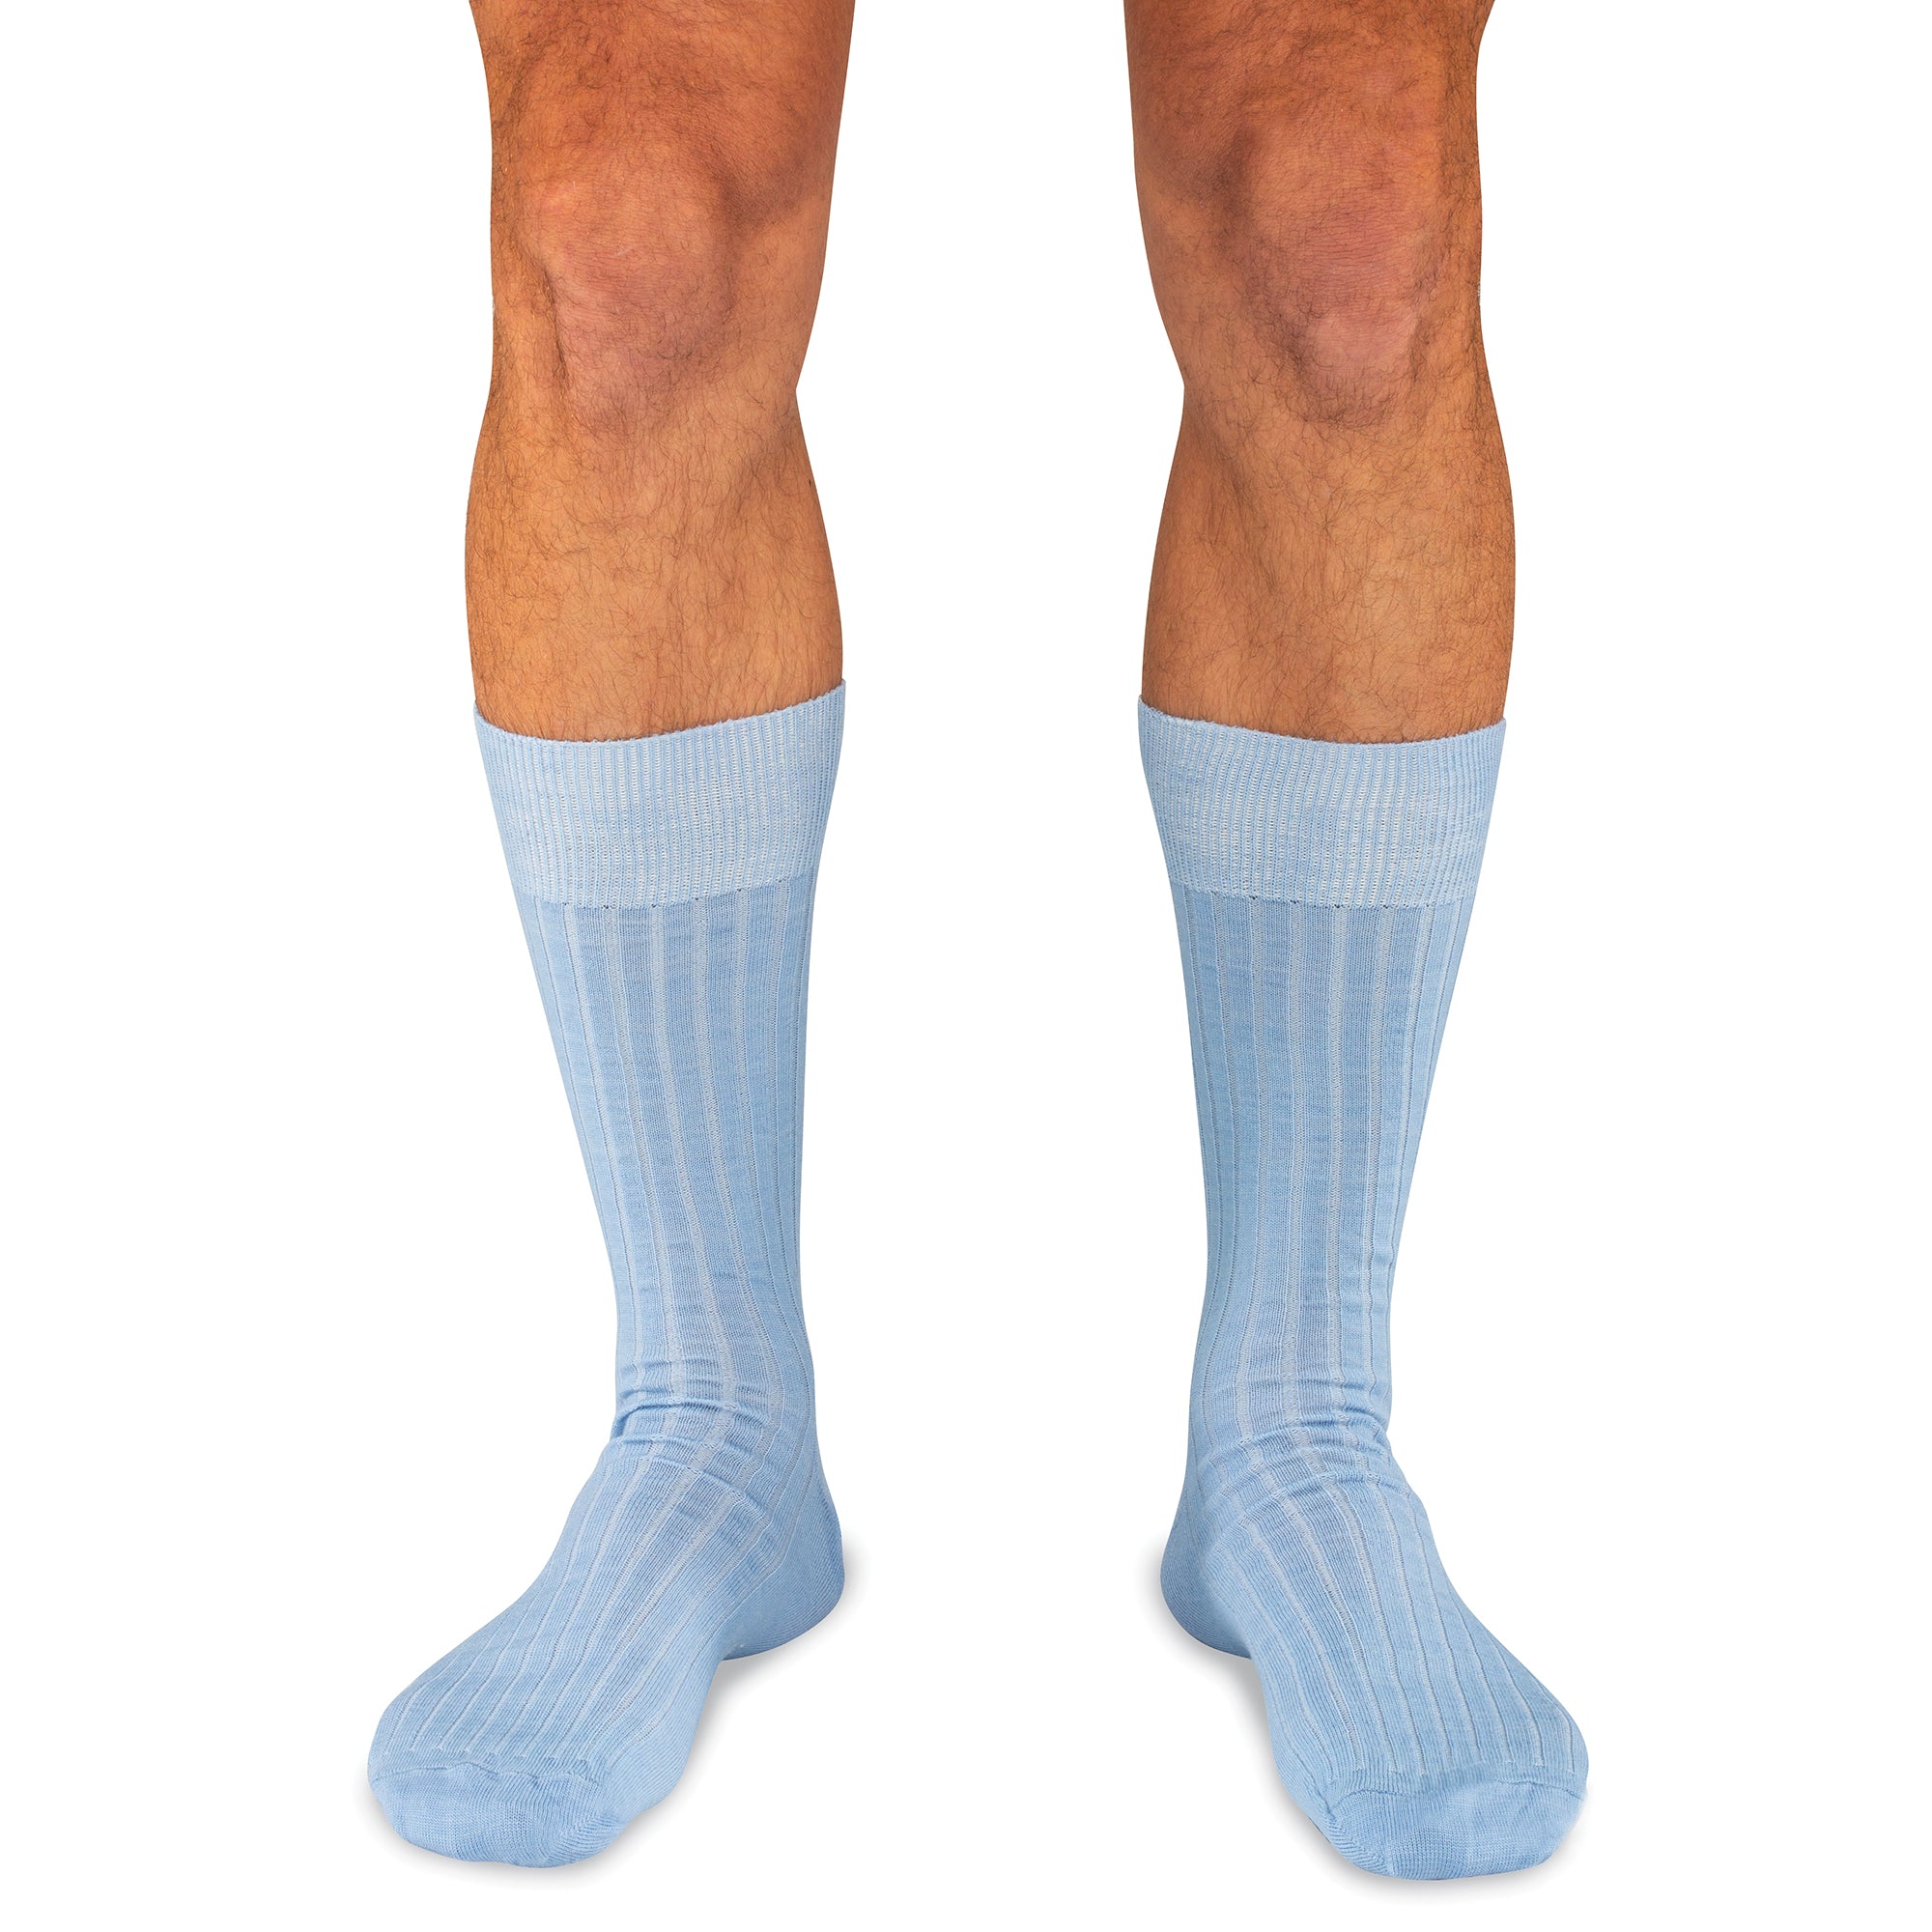 model wearing mid-calf length light blue merino wool dress socks